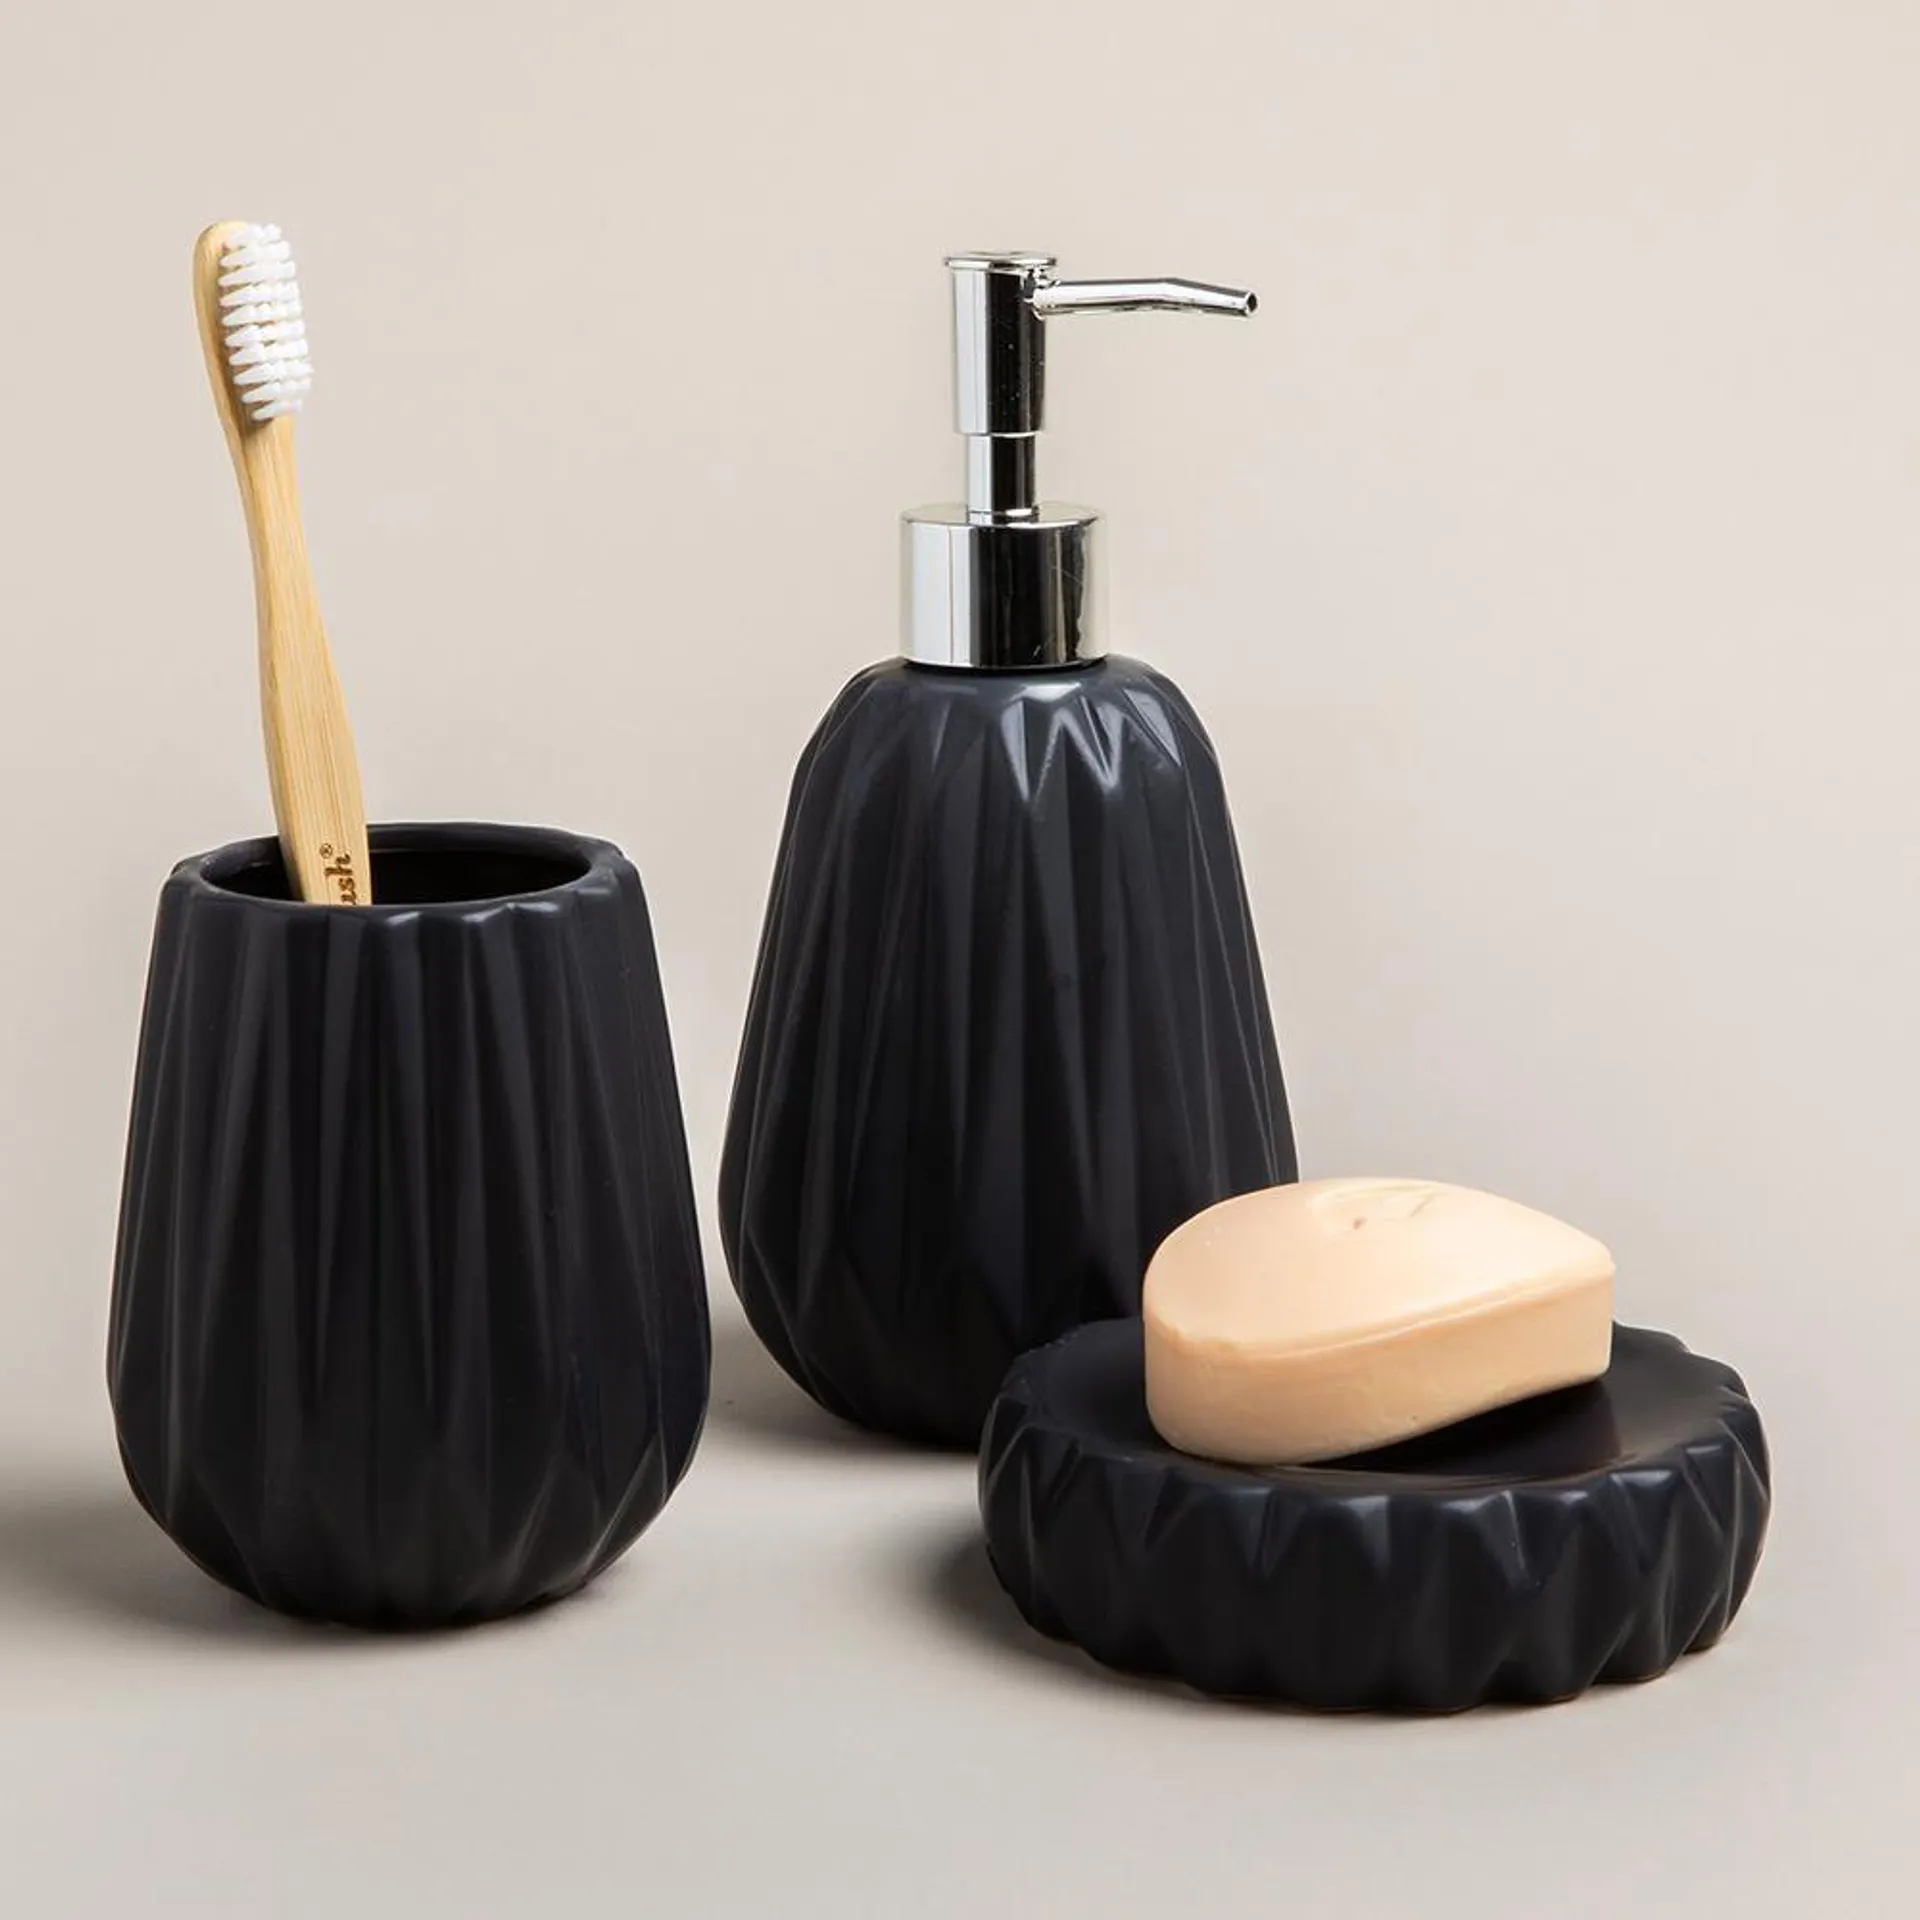 Harman Gem Ceramic Bath Accessory Combo - Set of 3 (Black)